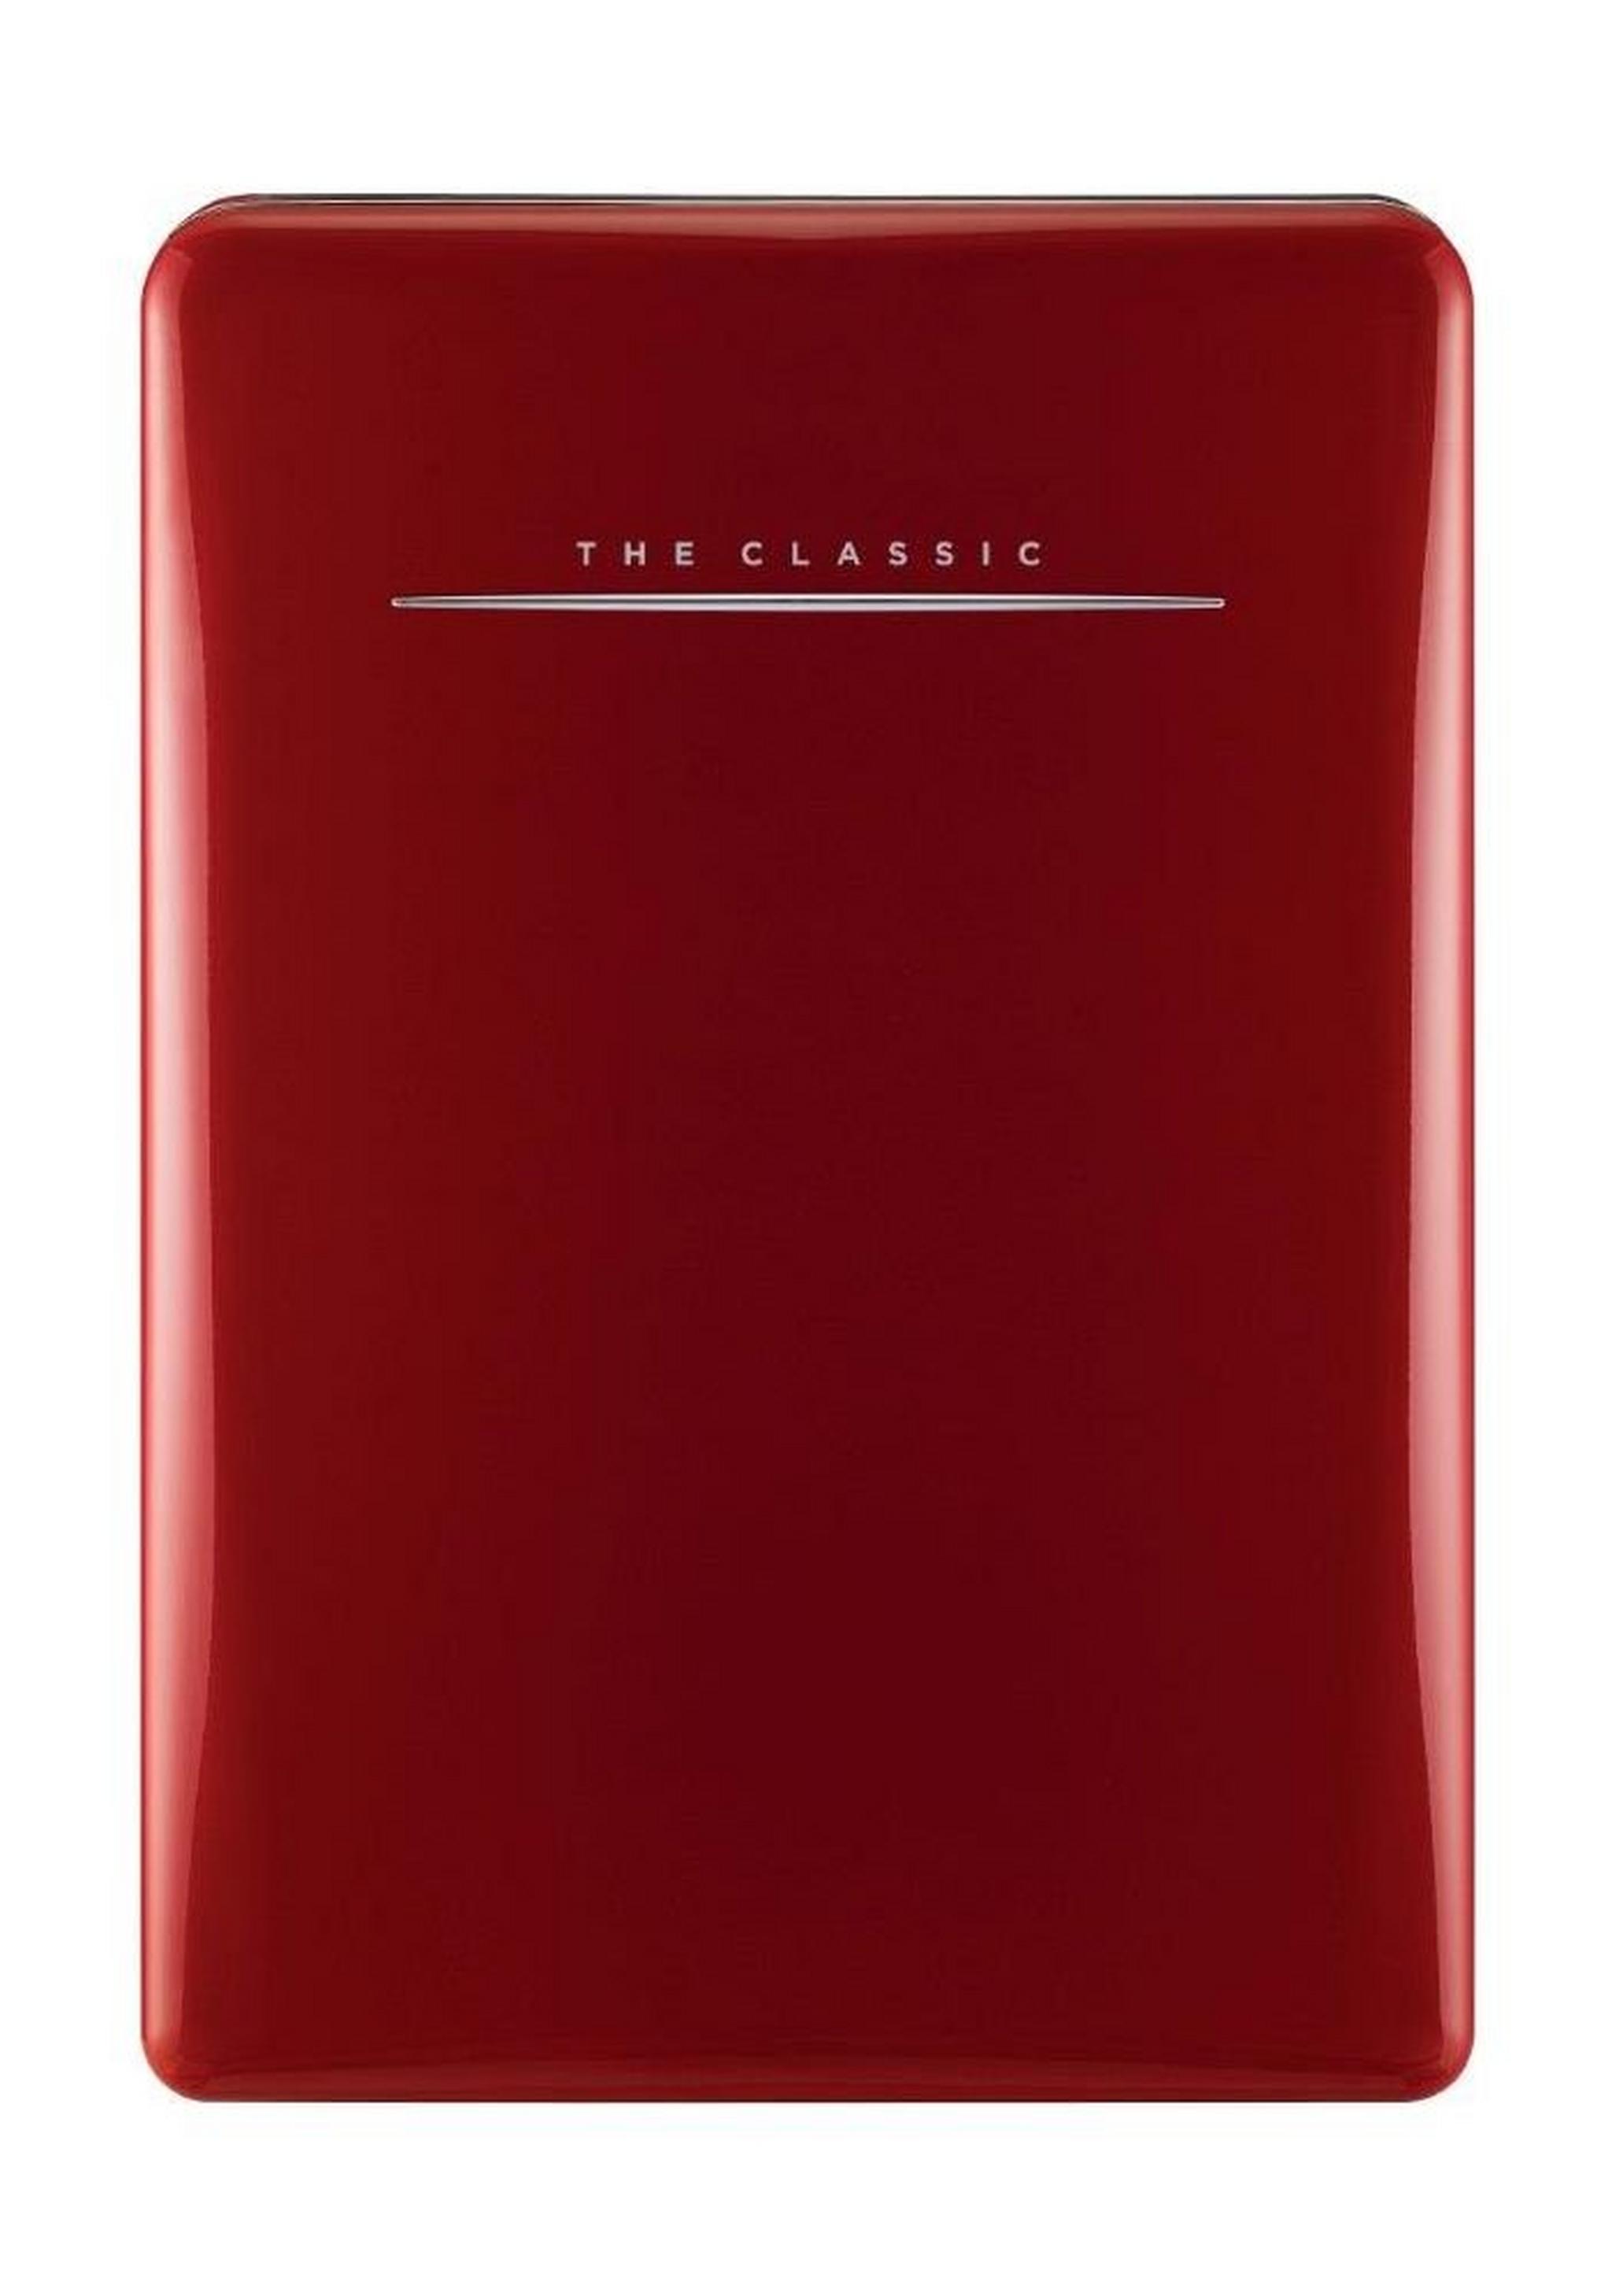 Daewoo The Classic Single Door Refrigerator (FN-102R) - Red